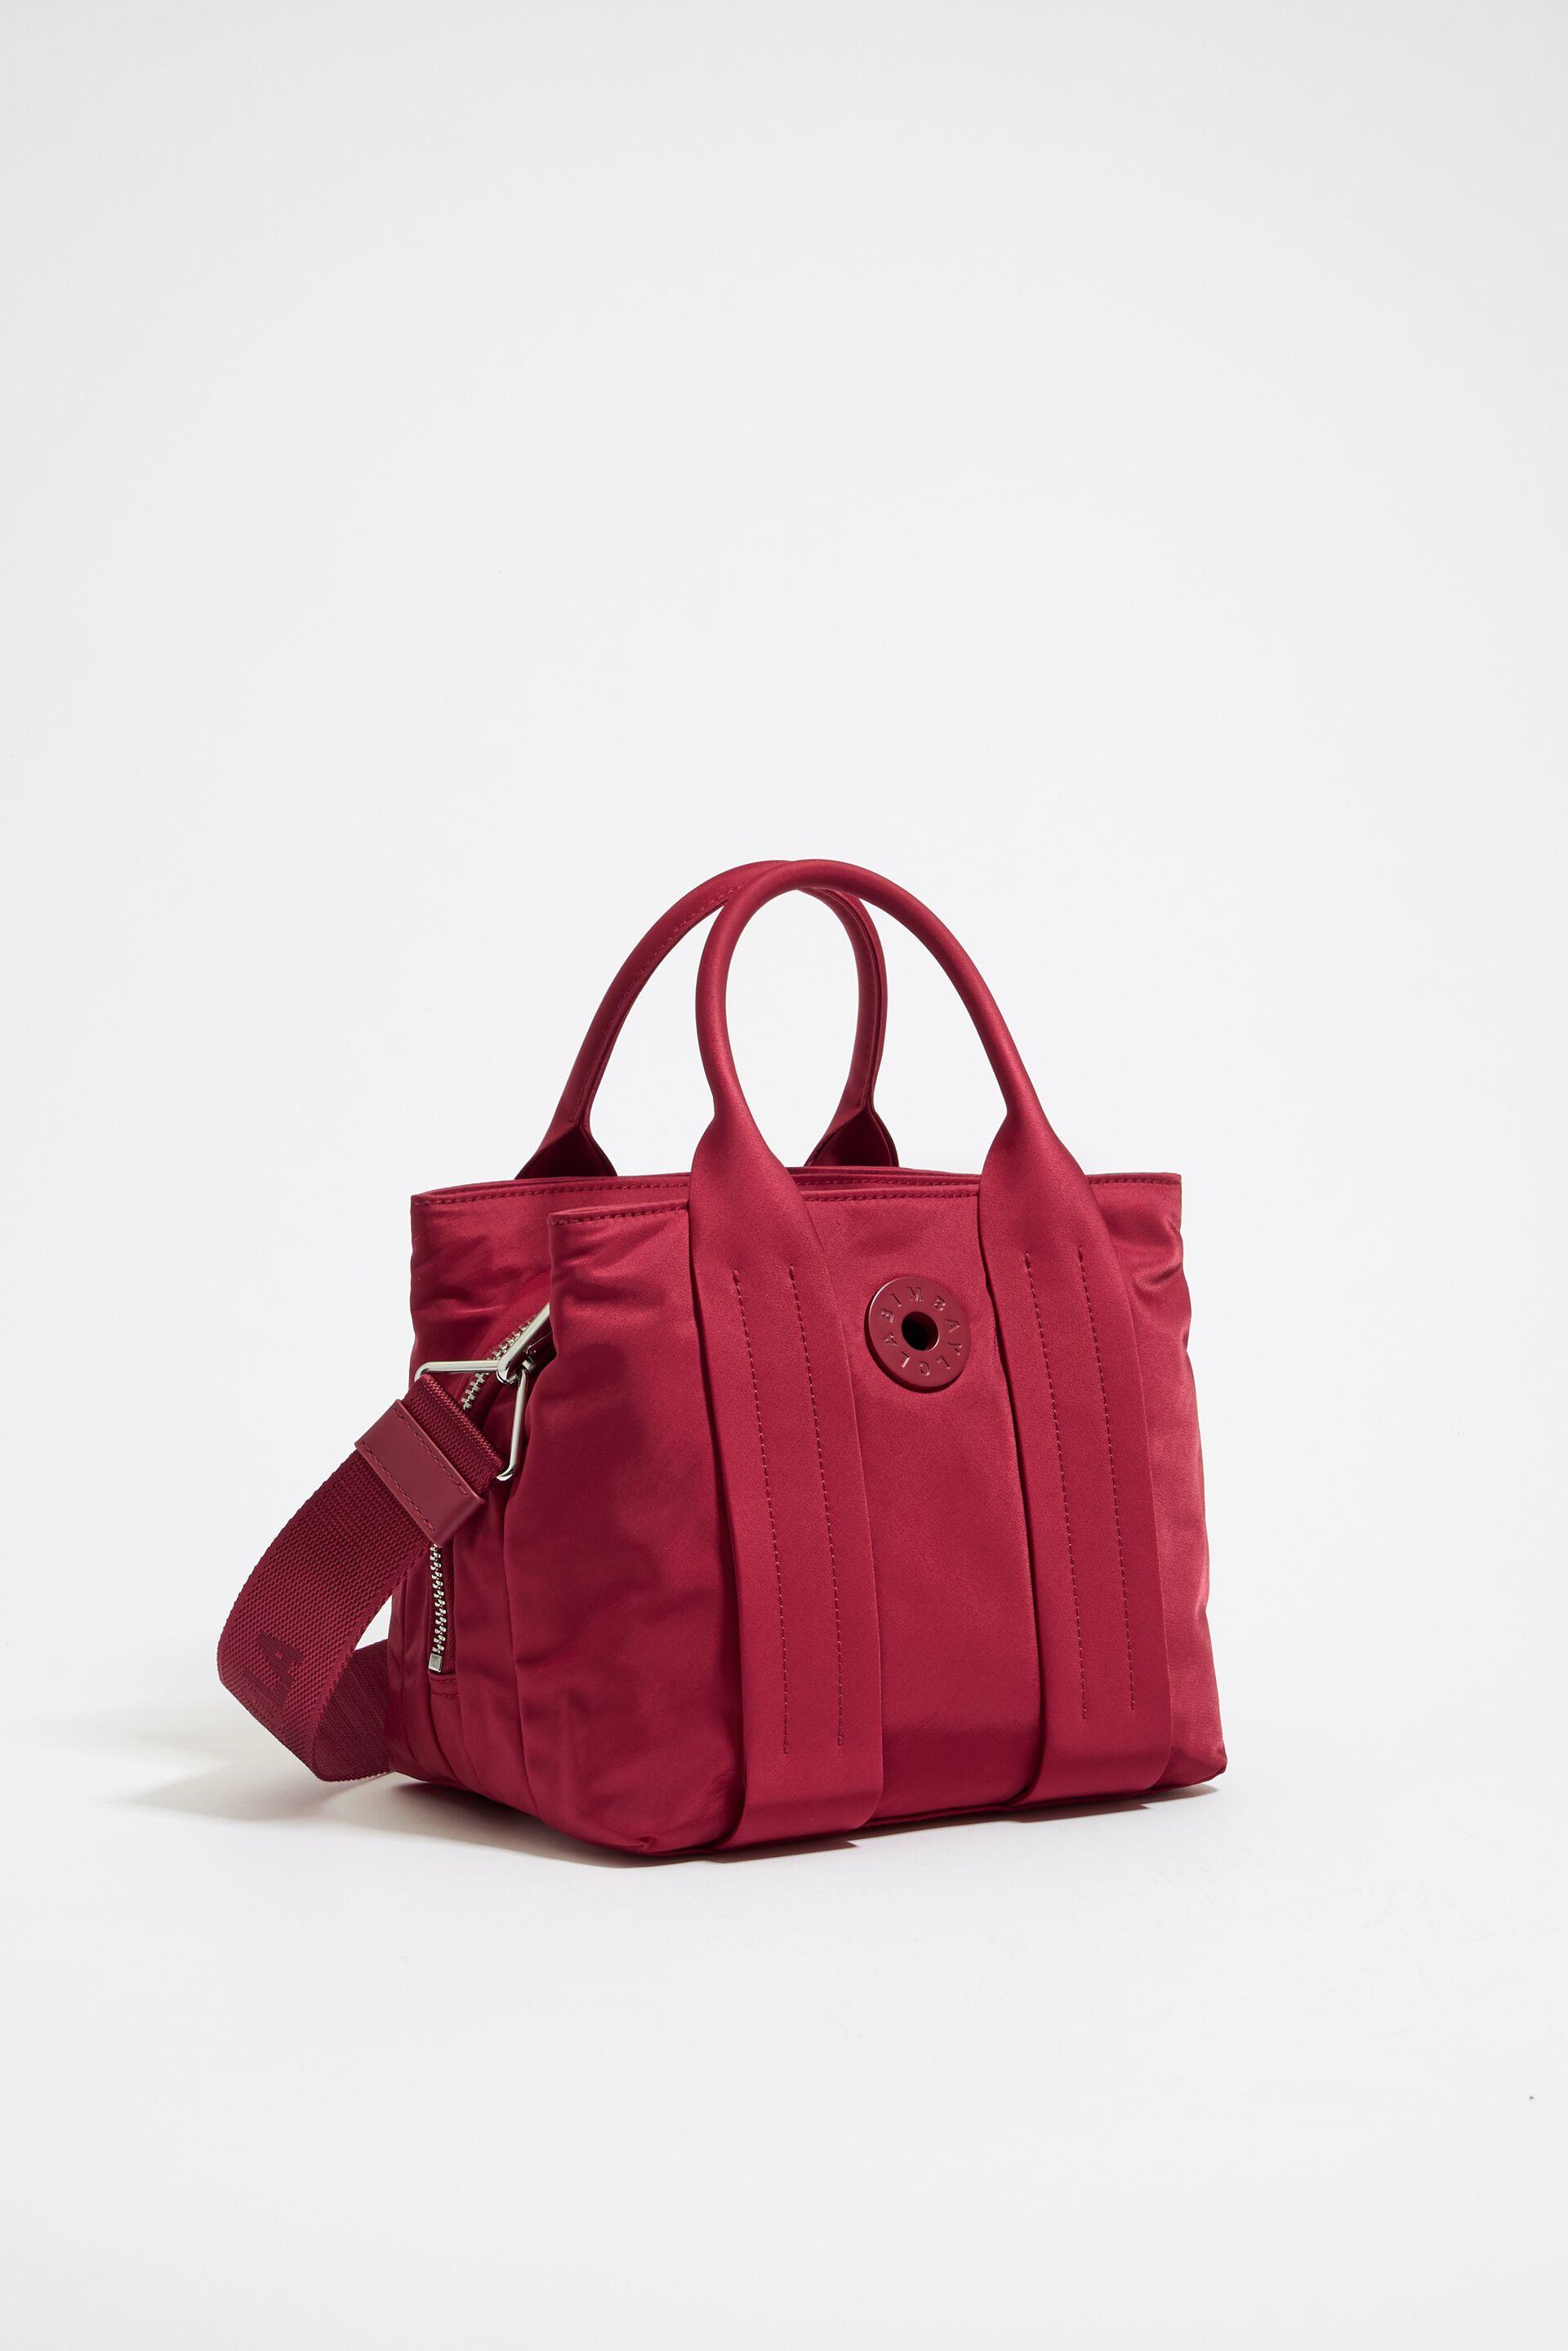 Fashion New Women's Foreign Style Net Red Plaid Handbag Tote Bag